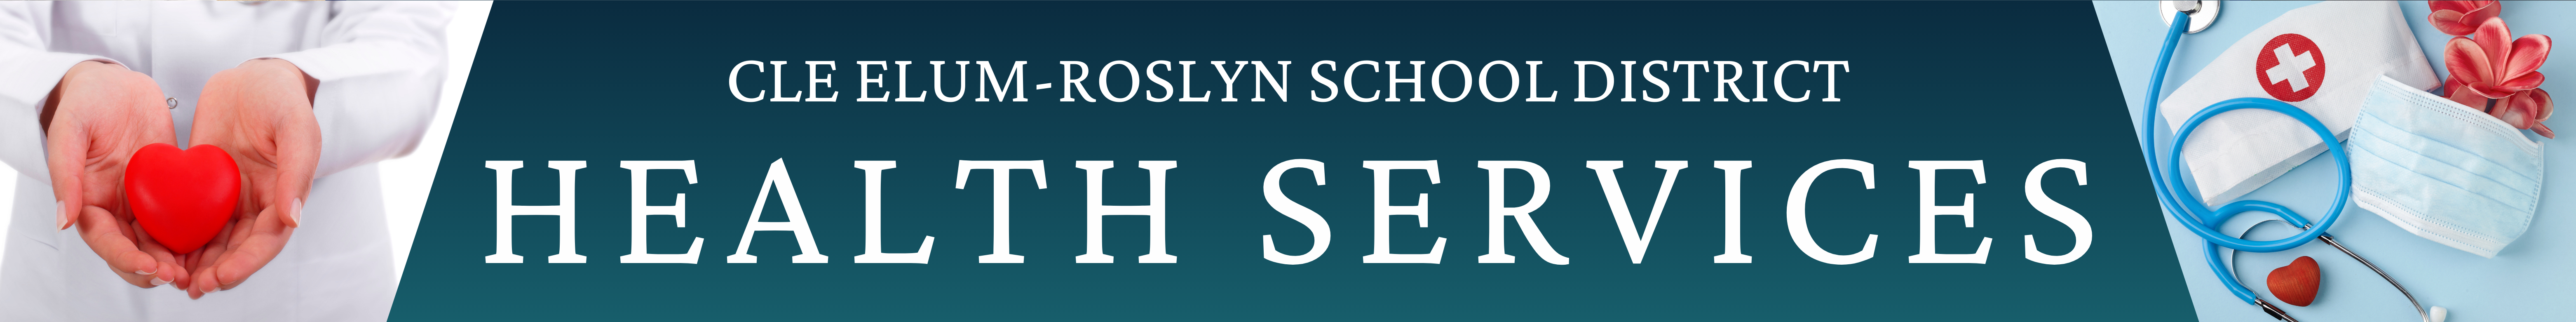 Cle Elum-Roslyn School District Health Services